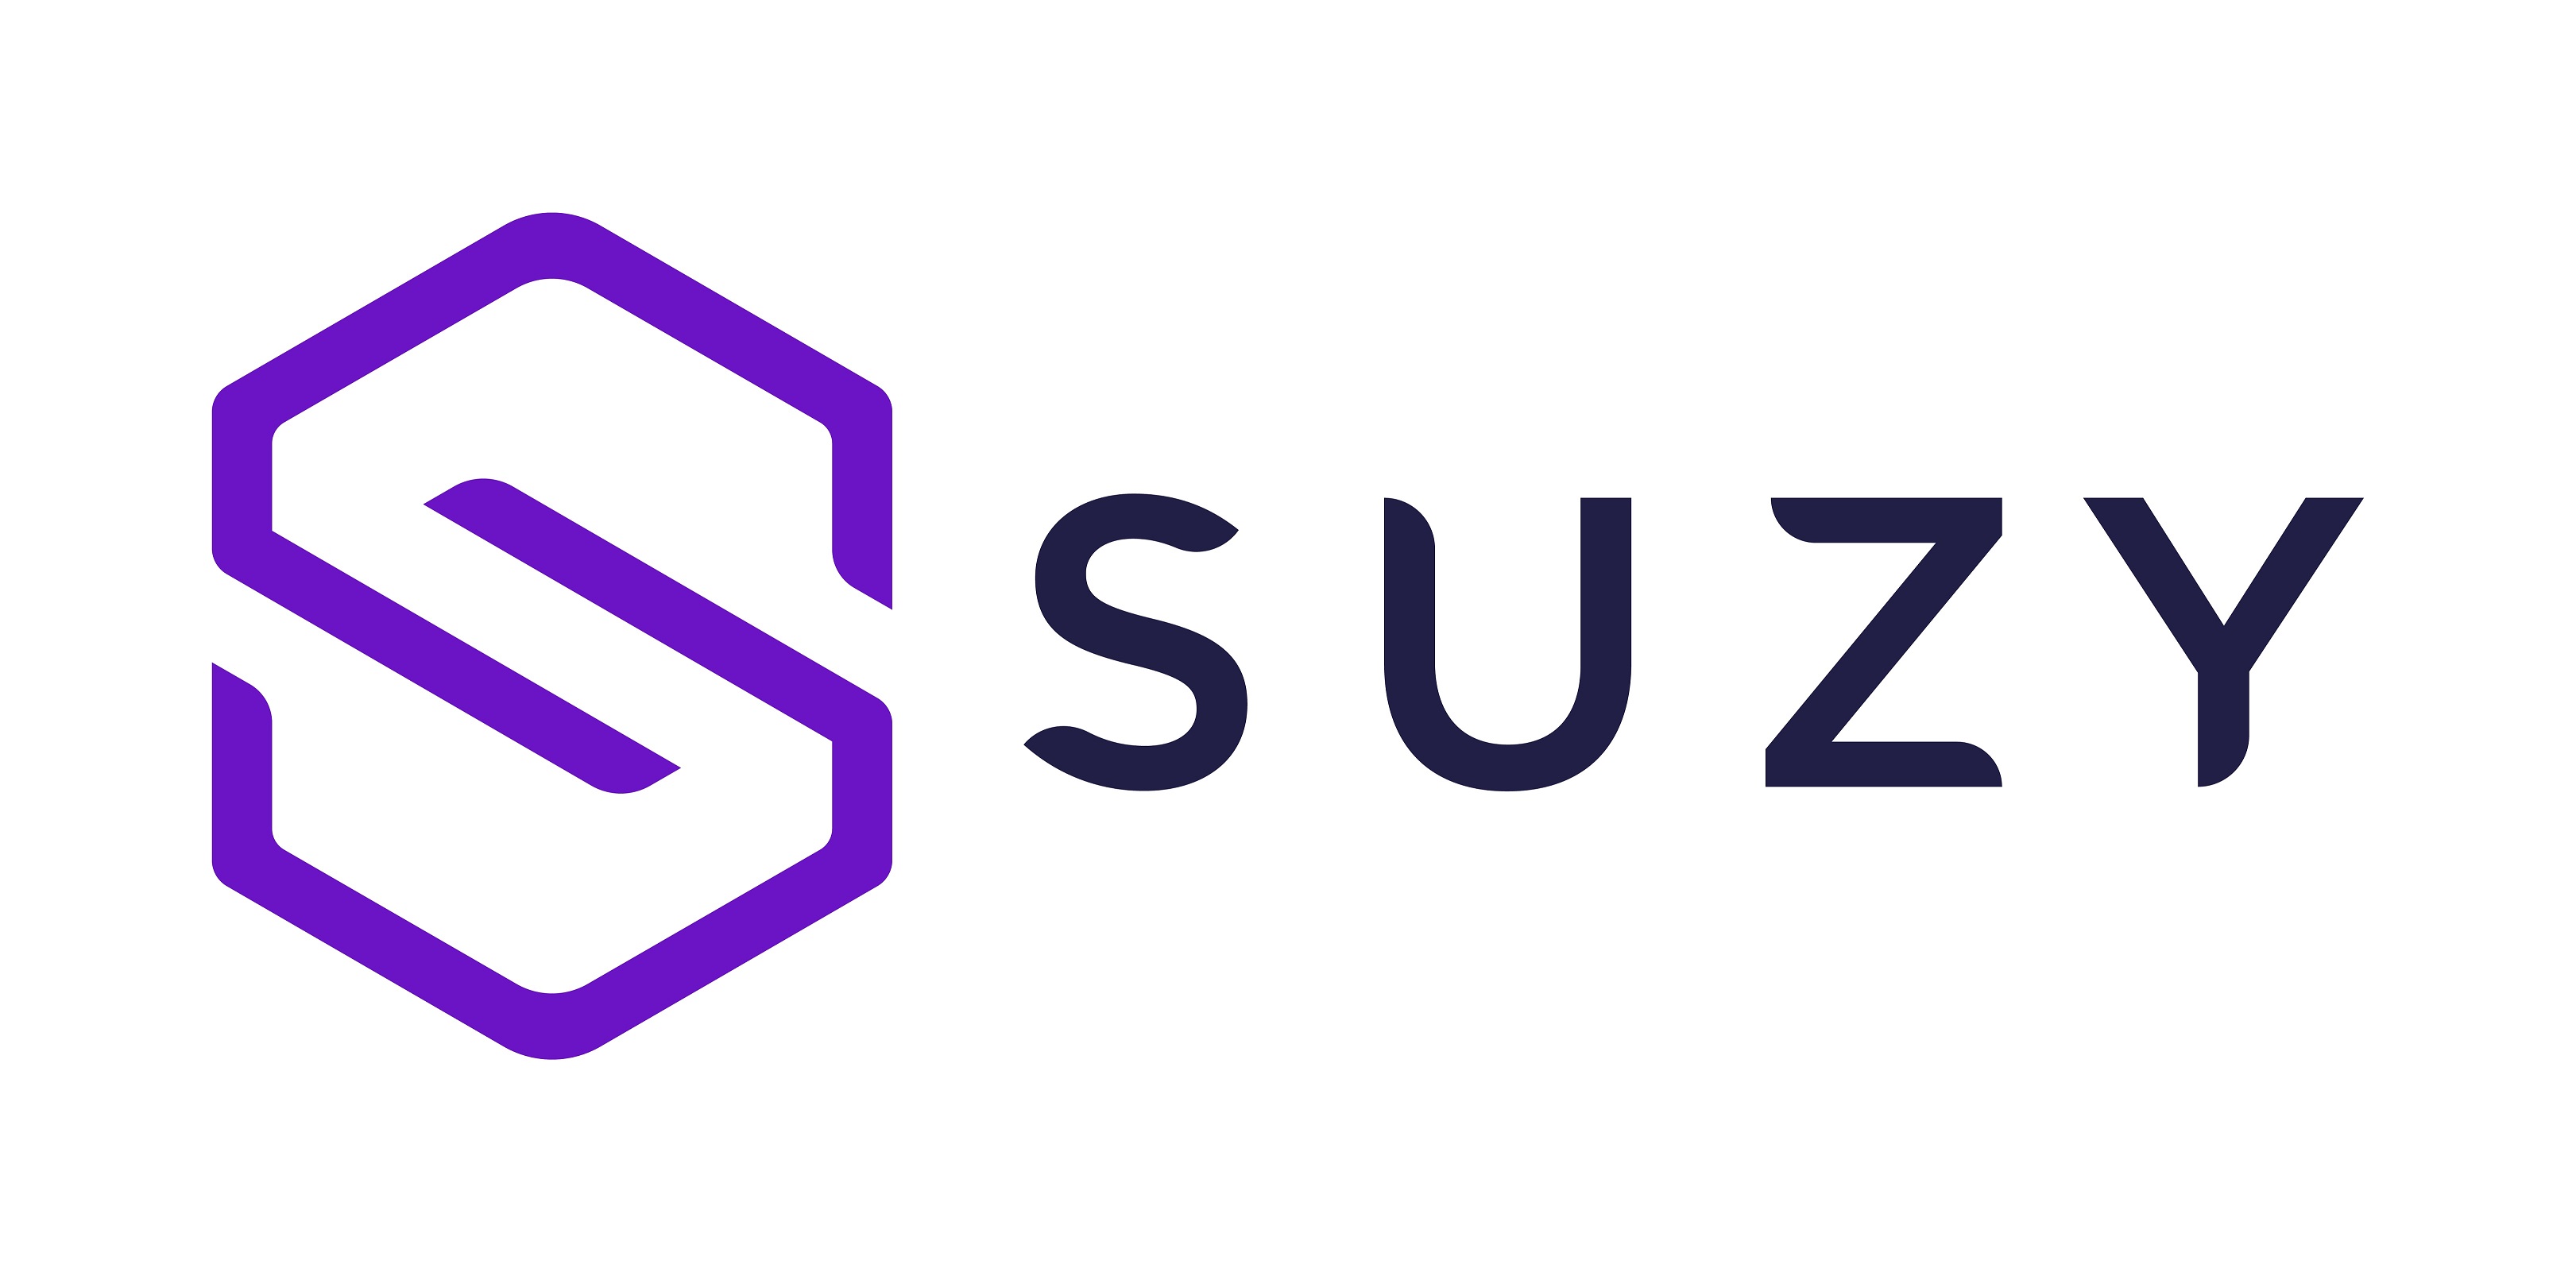 Suzy_logo.jpg